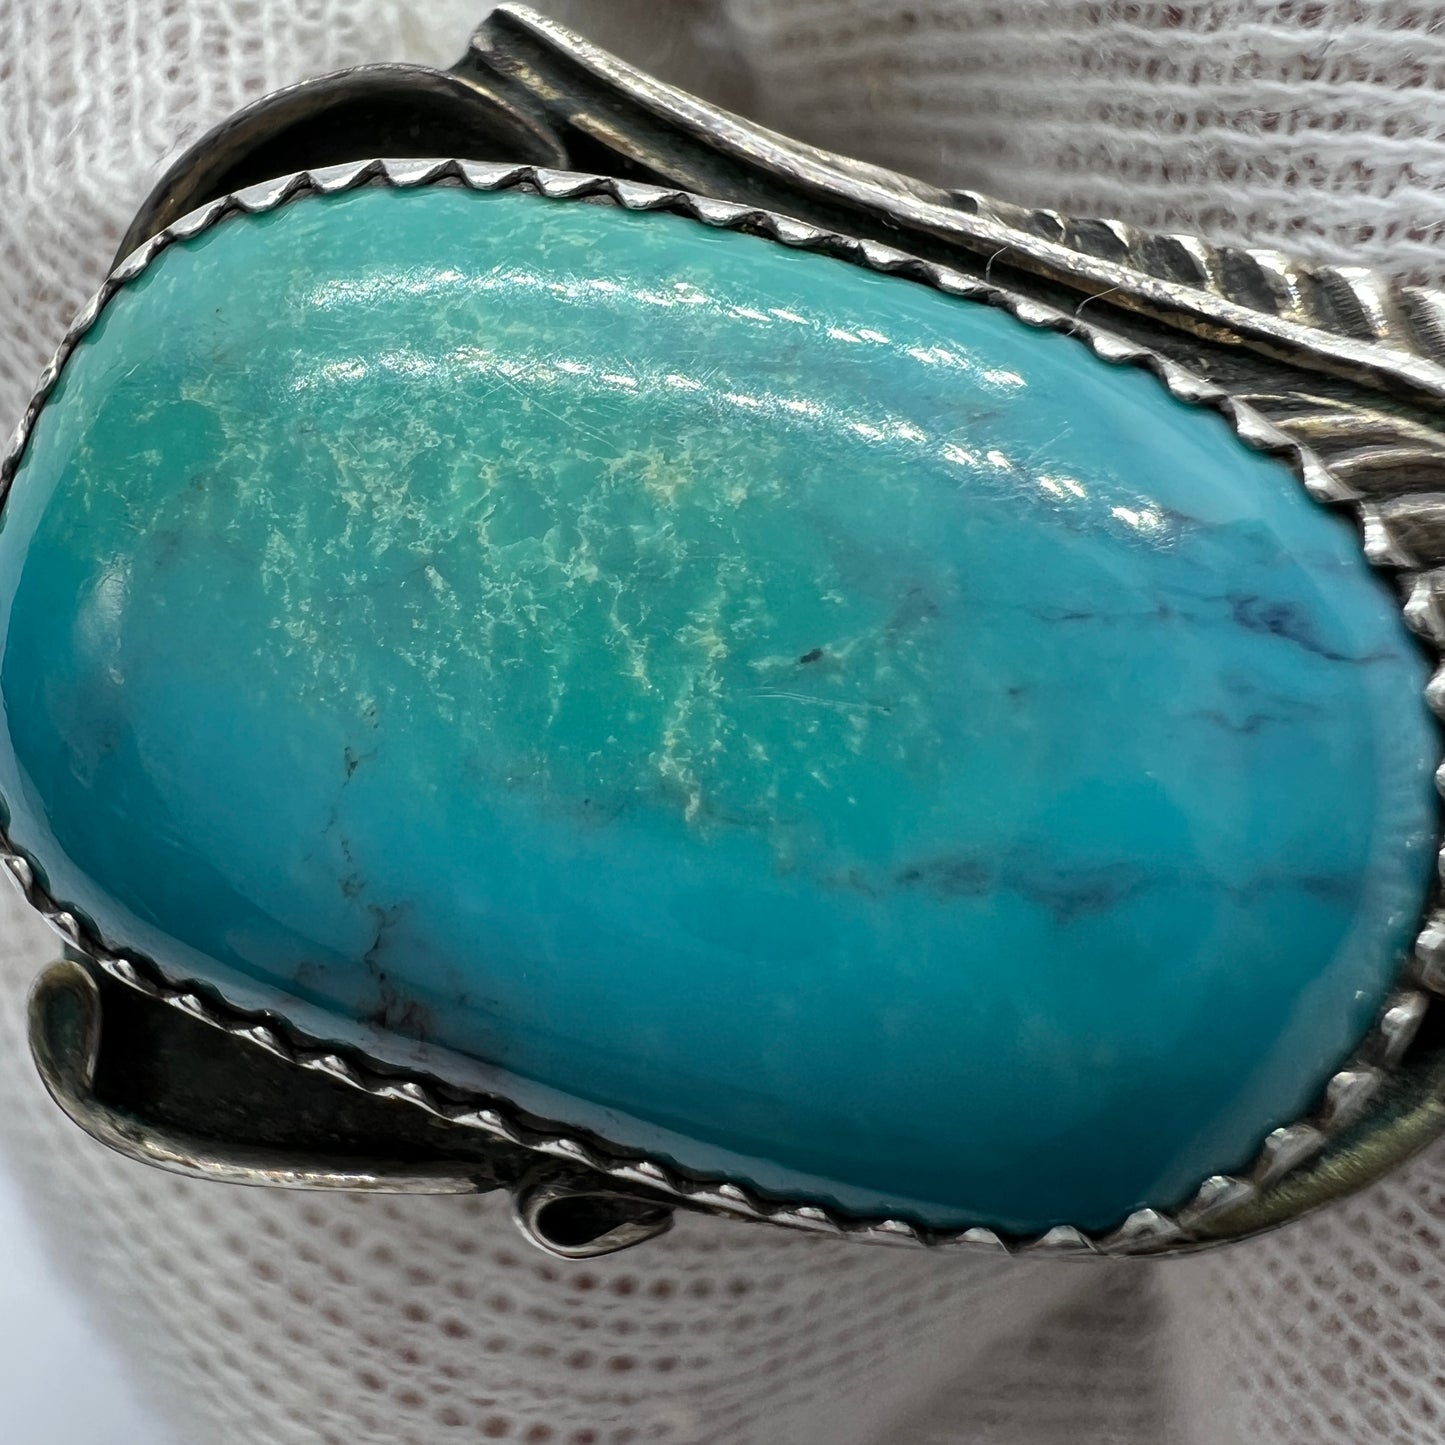 Maker TT Vintage Sterling Silver Turquoise Native American Ring.